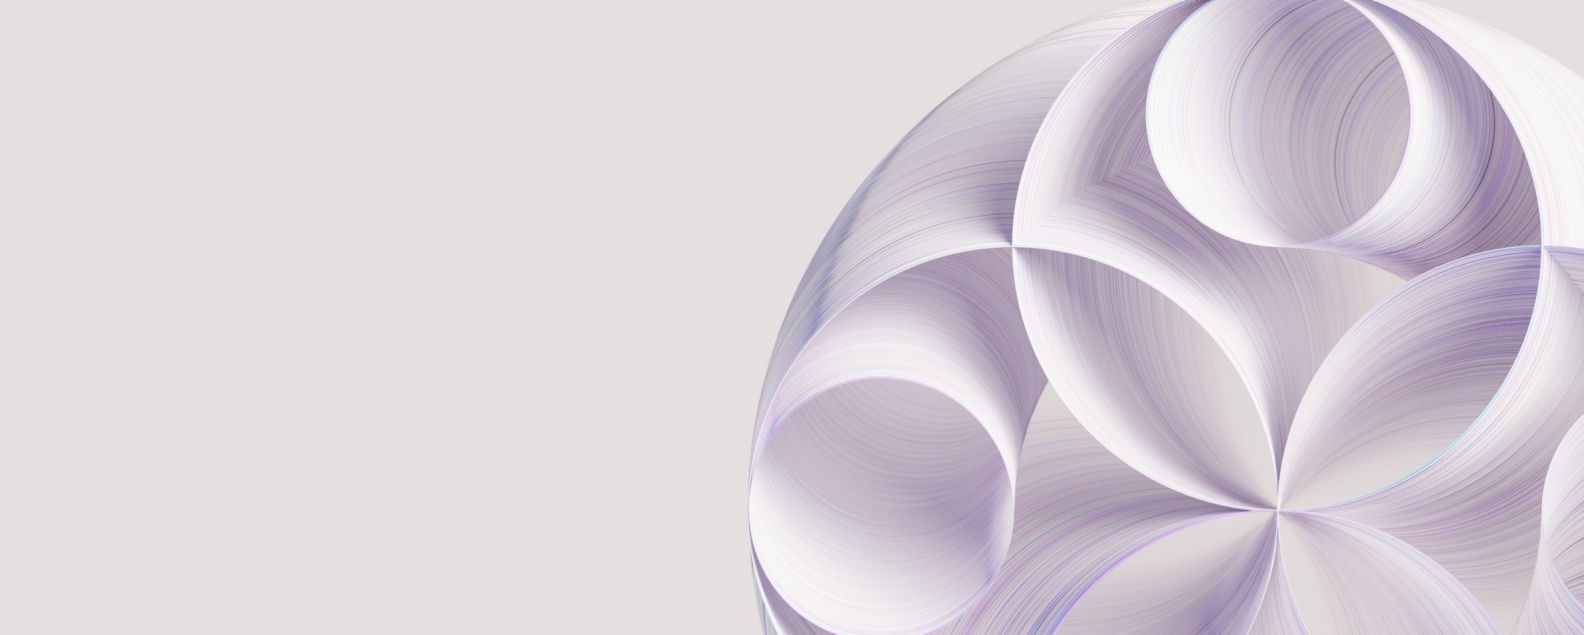 watsonxの抽象的な紫色の円の図